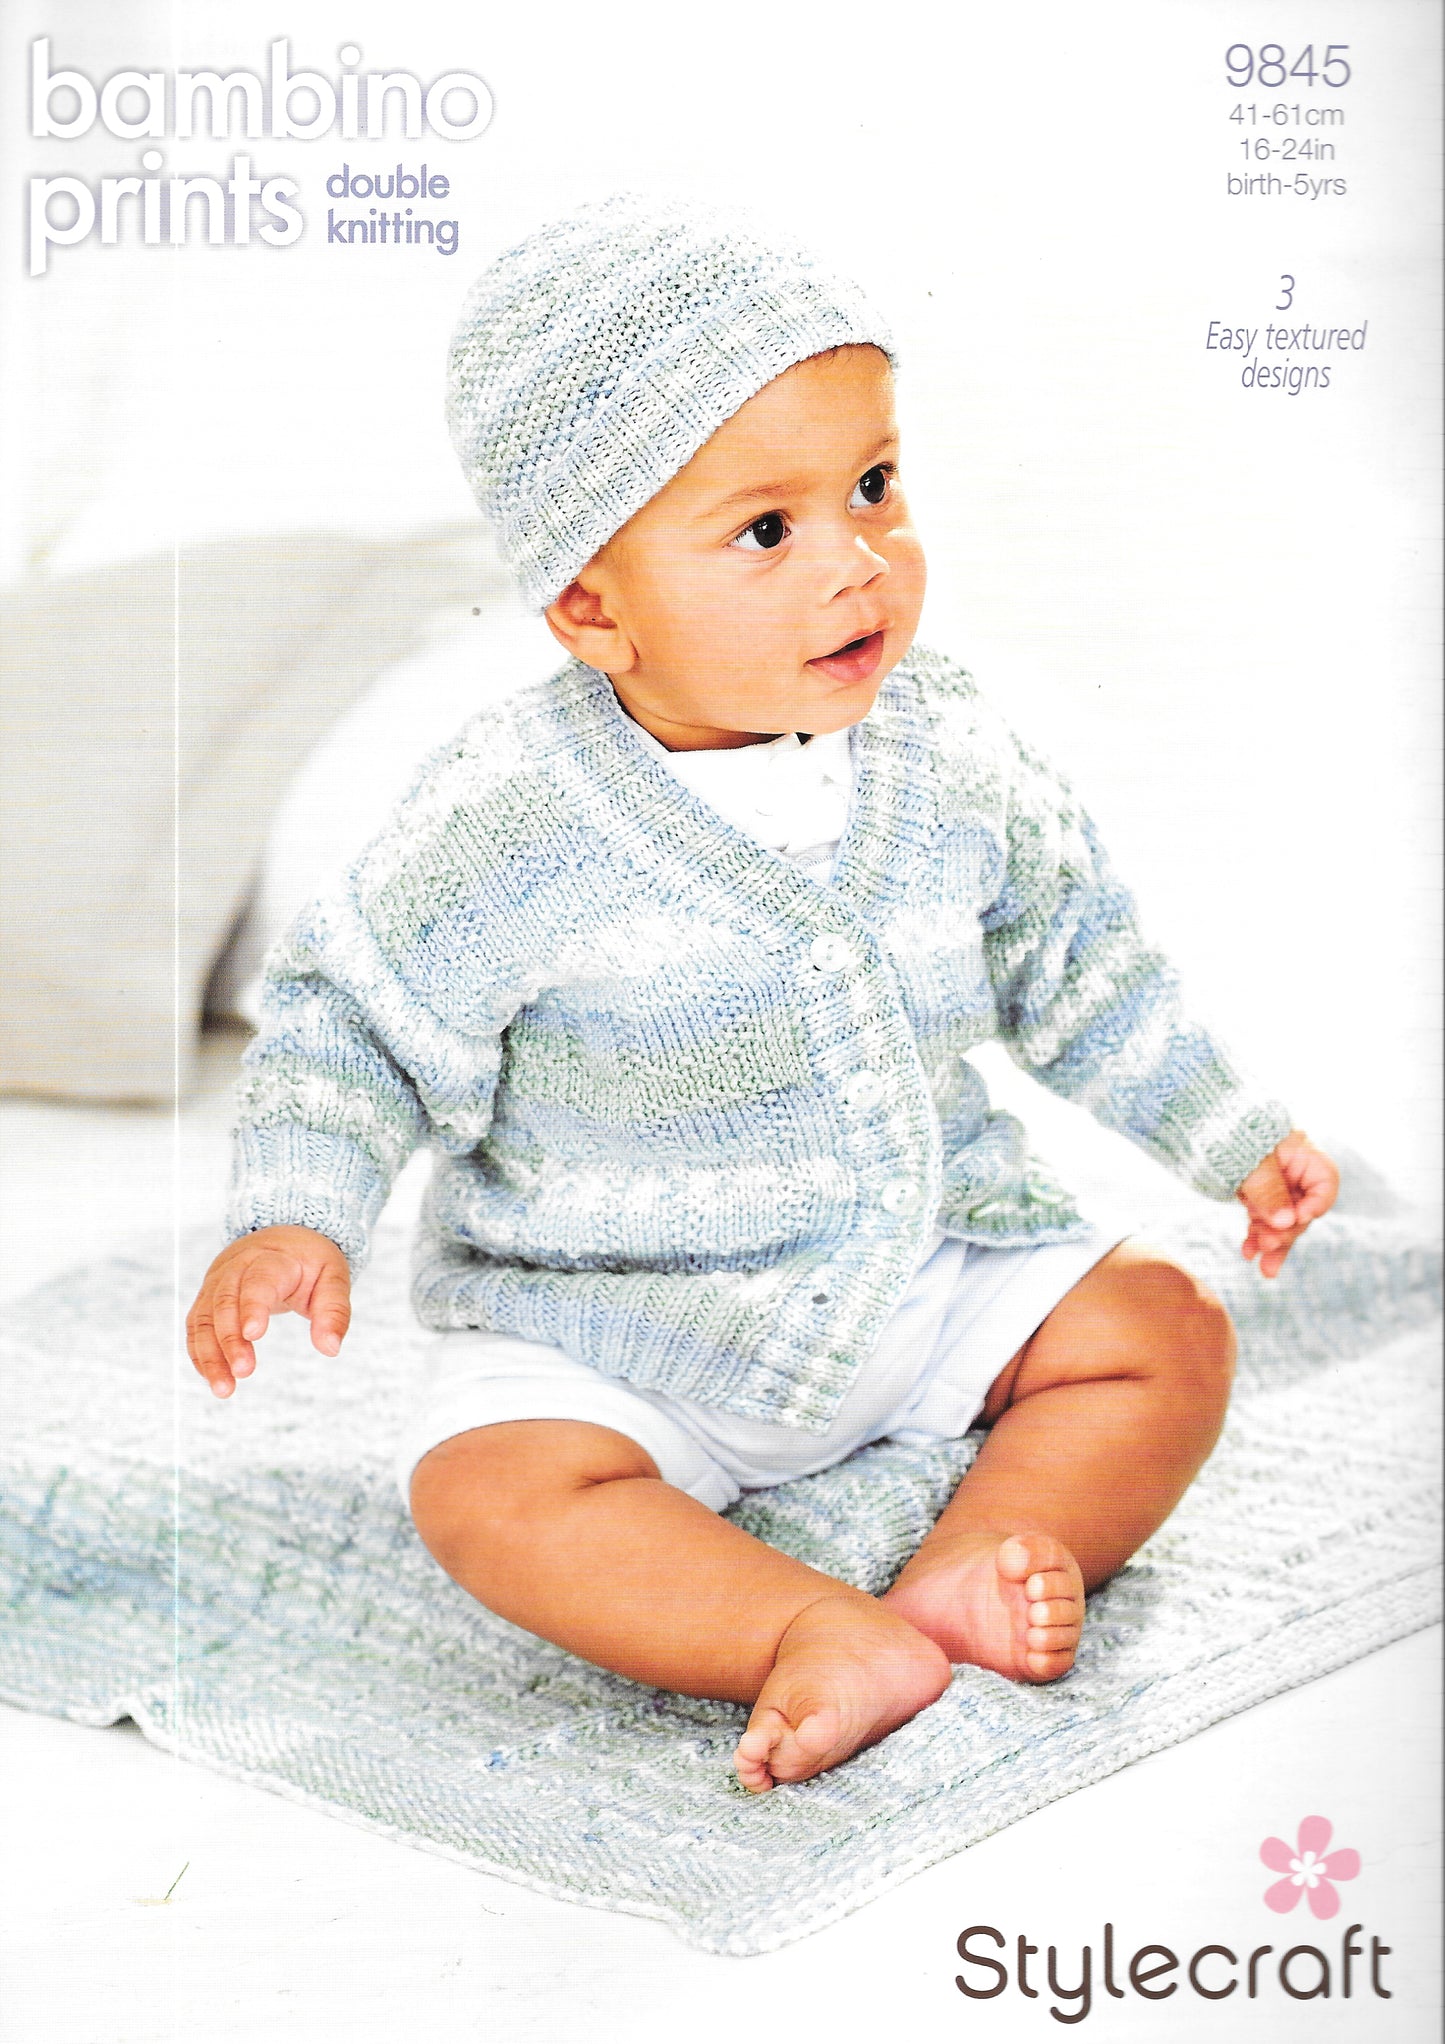 9845 Stylecraft knitting pattern. Child's Cardigan/Hat/Blanket. Double Knitting